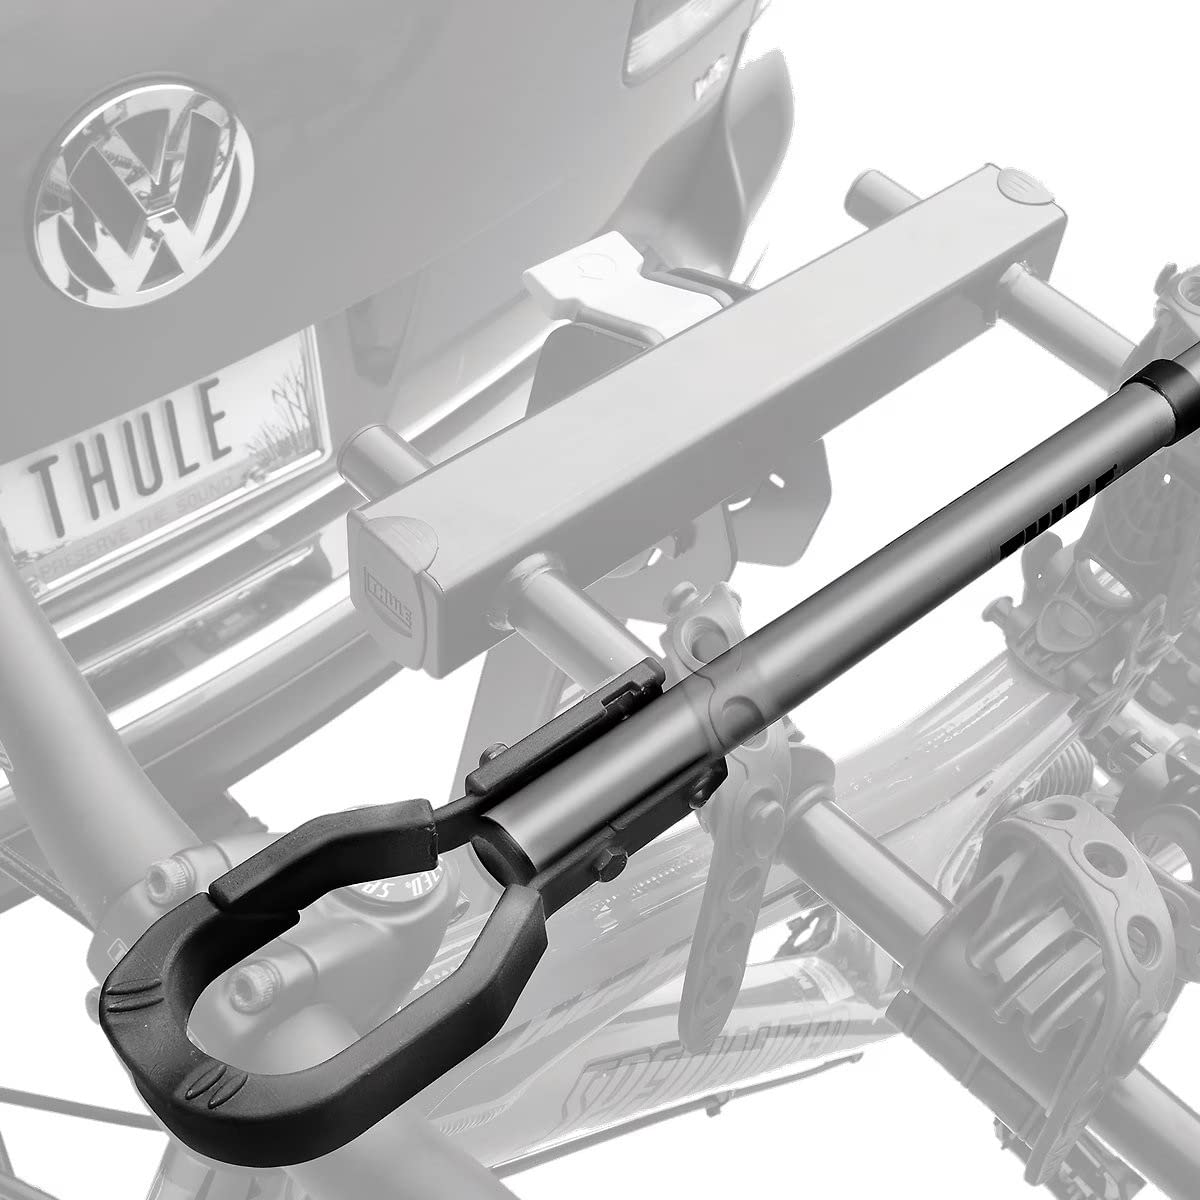 Thule Frame Adapter - Bicycle Cross Bar $38.95